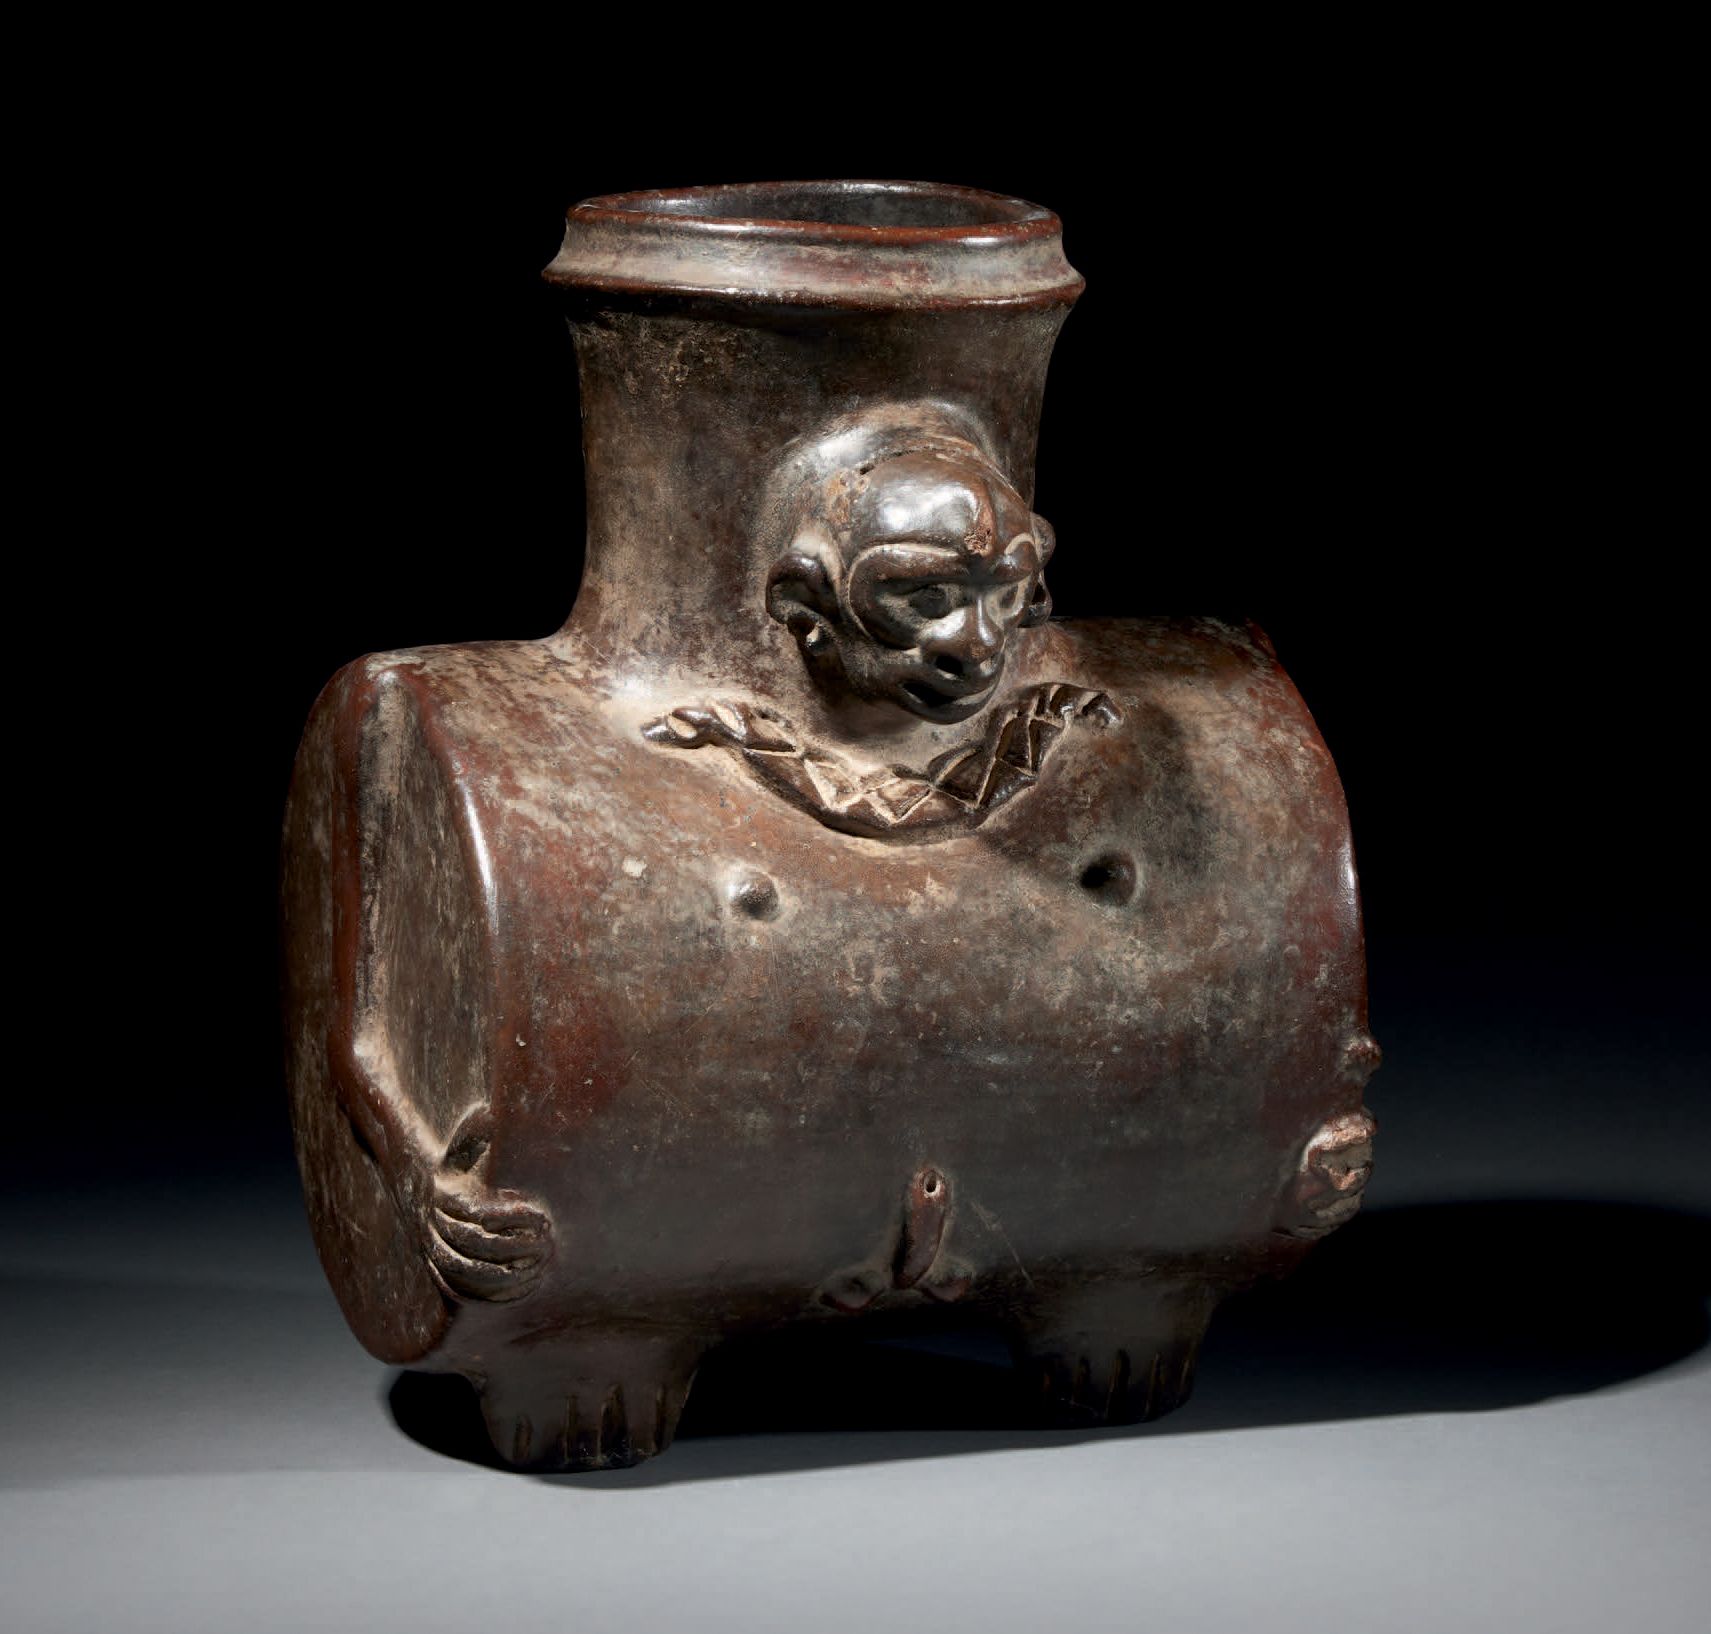 Null 猴子打鼓的花瓶
玛雅文化，墨西哥-危地马拉
古典末期，公元600-900年C.
陶瓷，带深棕色滑块
高25厘米
出处：
- 美国私人收藏，1994年获&hellip;